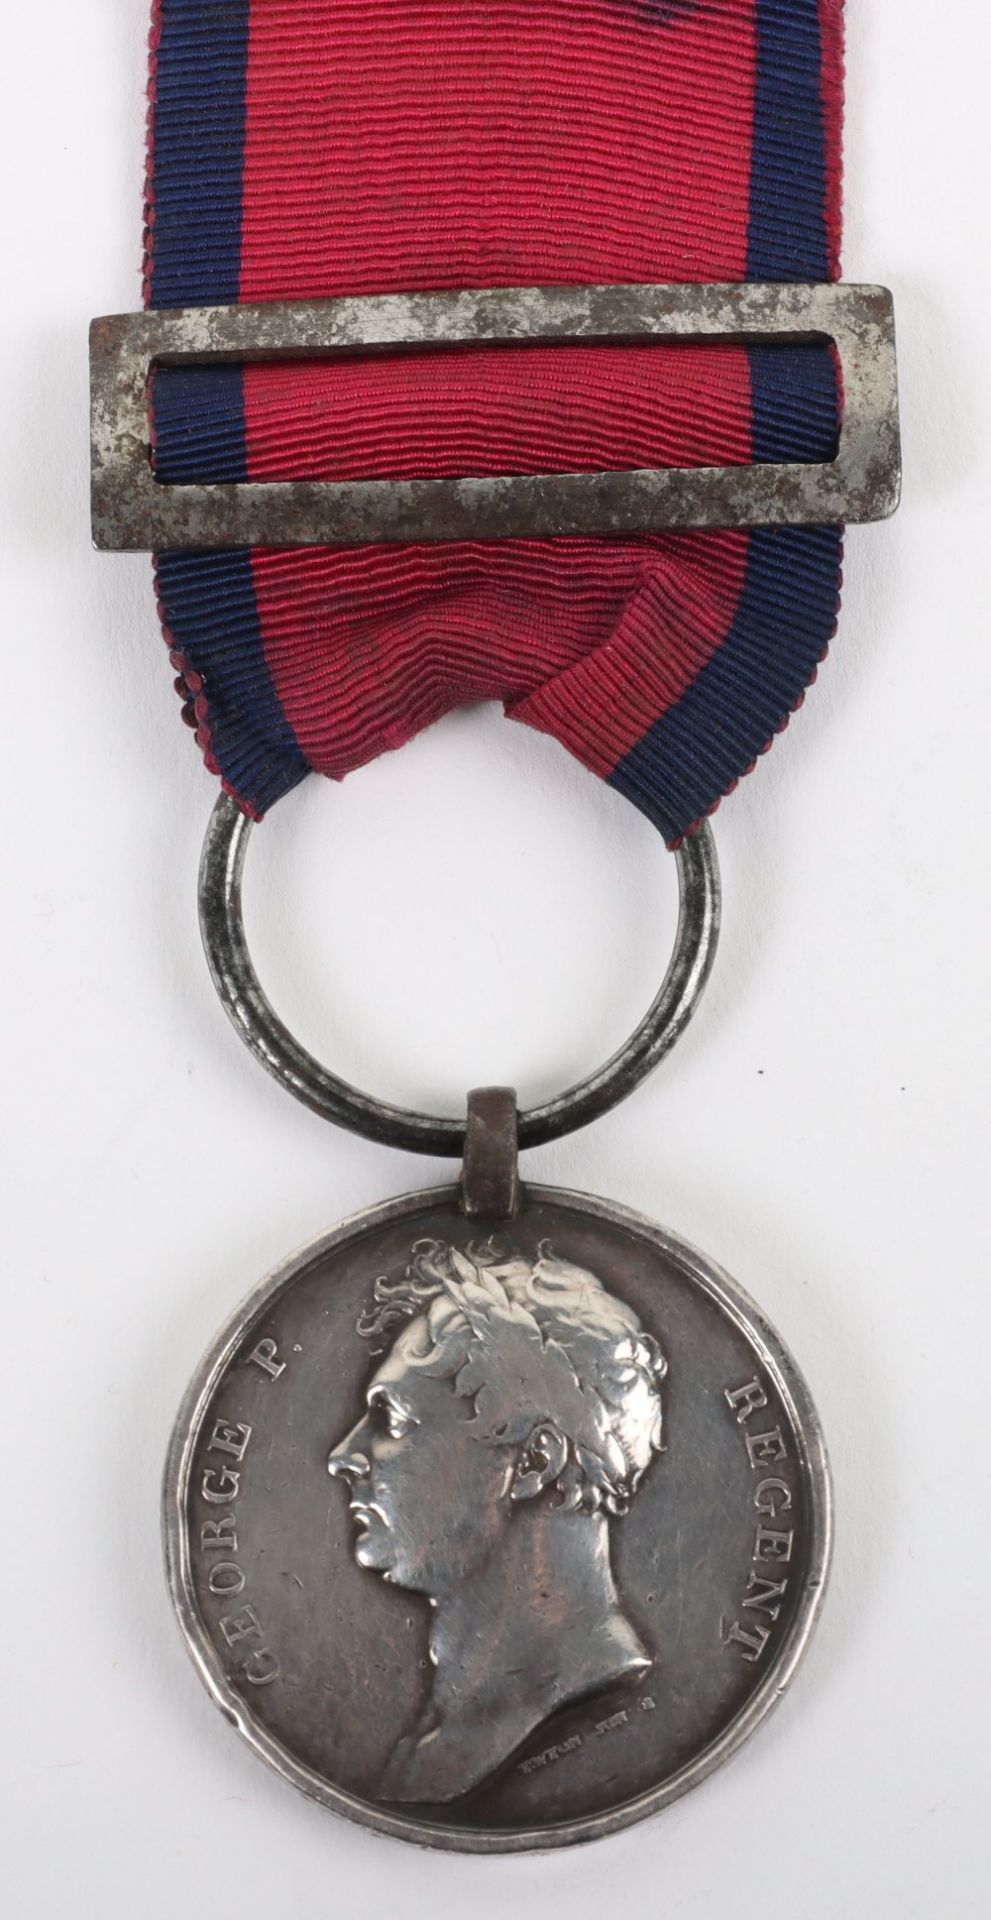 British 1815 Waterloo Medal 4th or Kings Own Regiment of Foot - Image 3 of 5